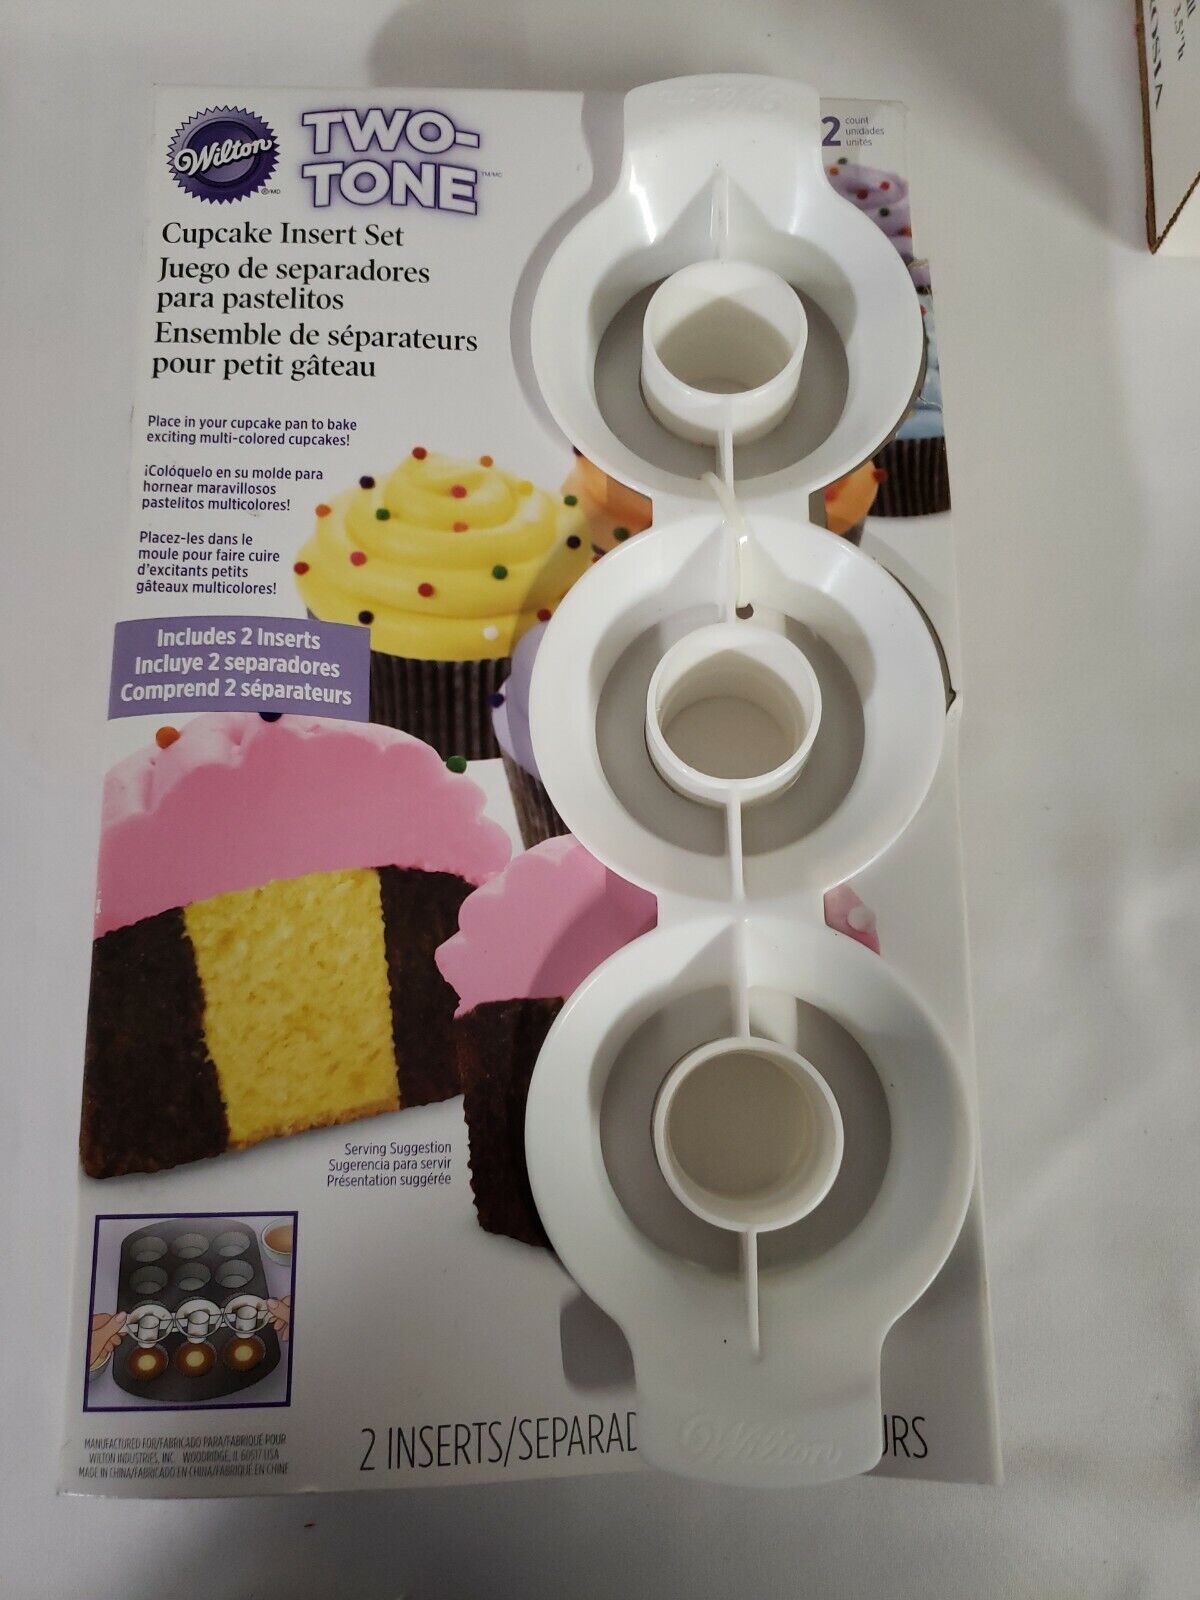 Wilton - Cupcake 2 Insert Set - Makes Two-Tone Multi-Colored Cupcakes 